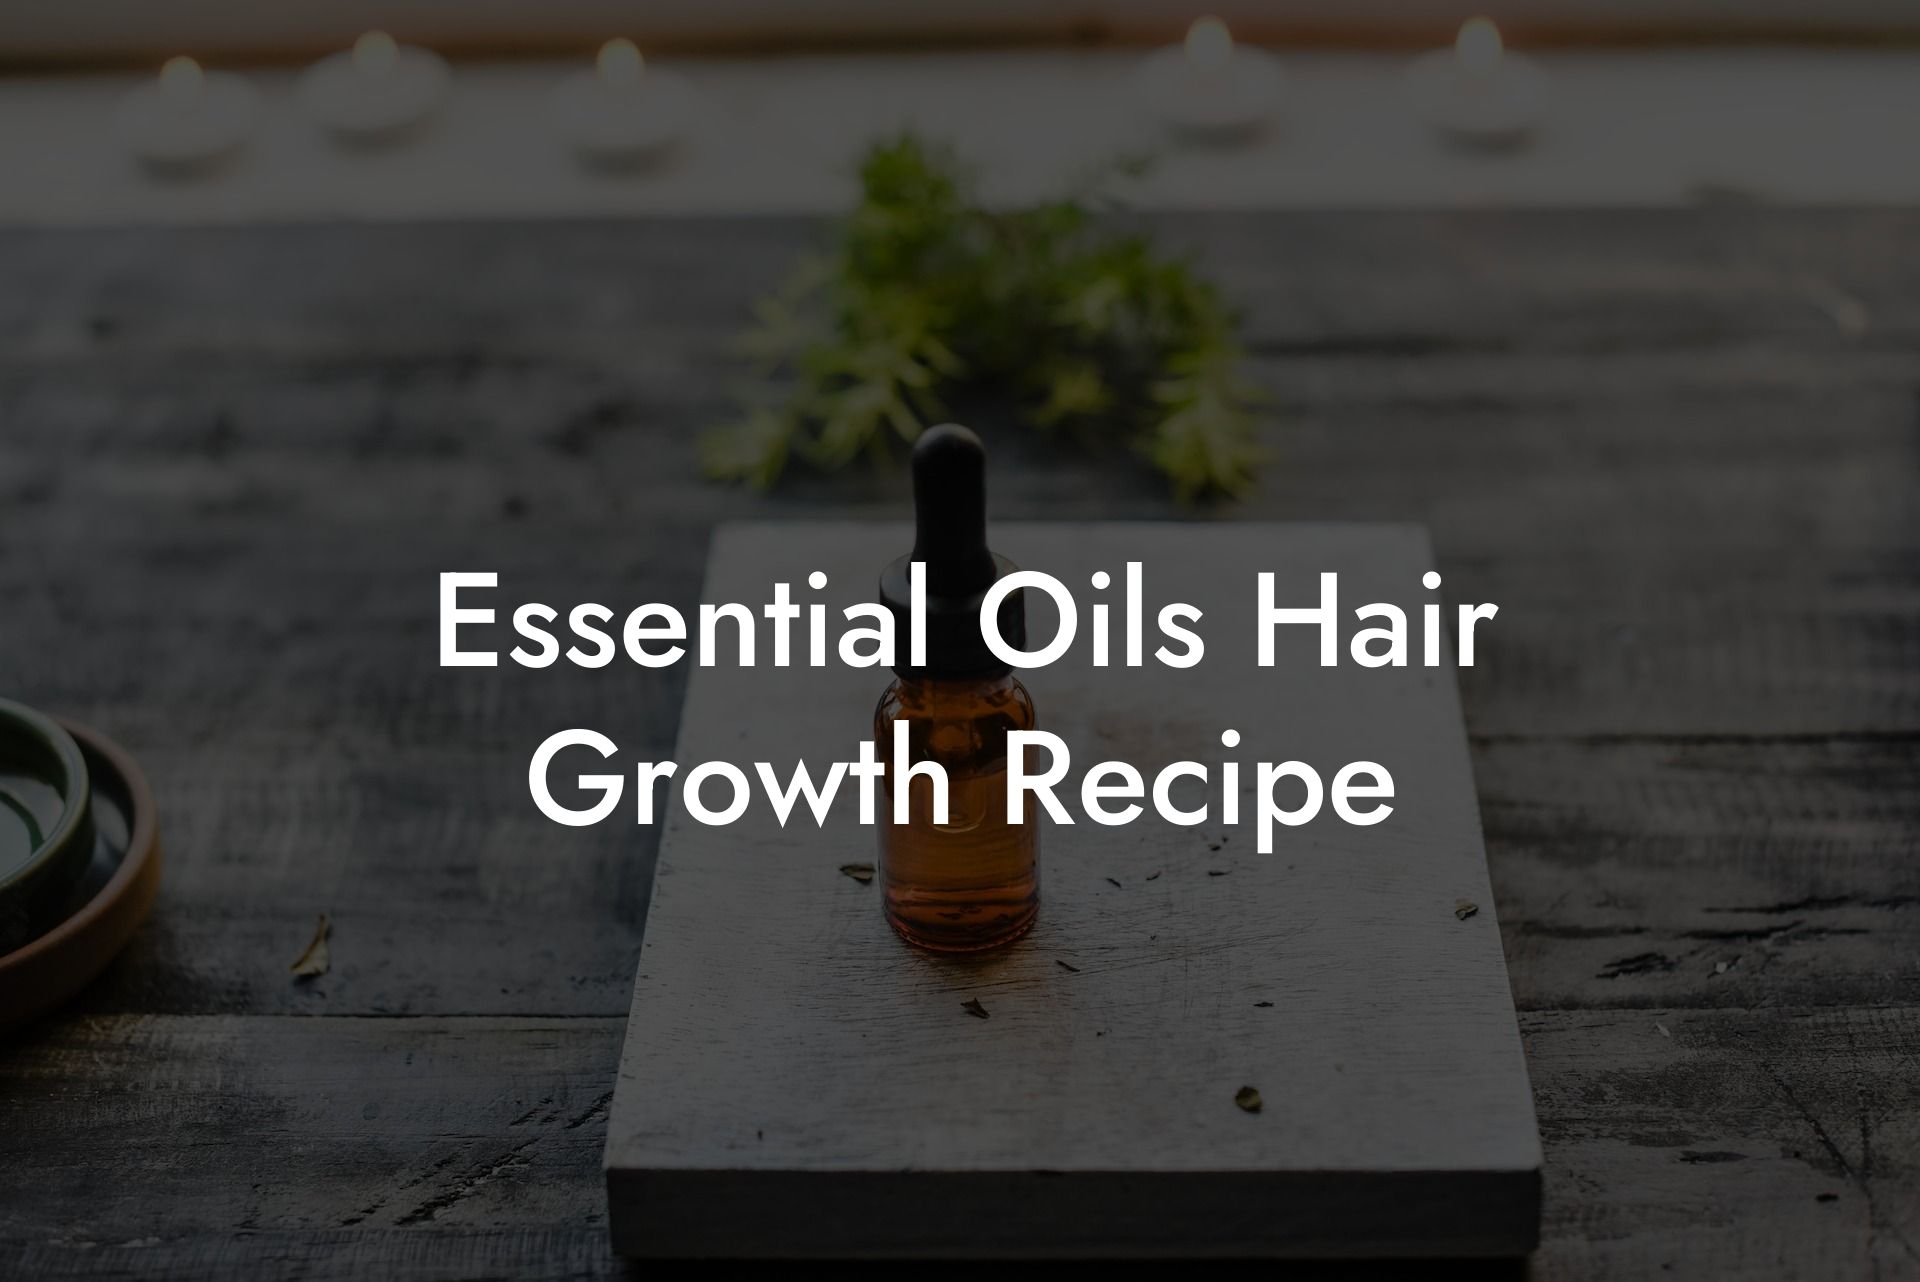 Essential Oils Hair Growth Recipe